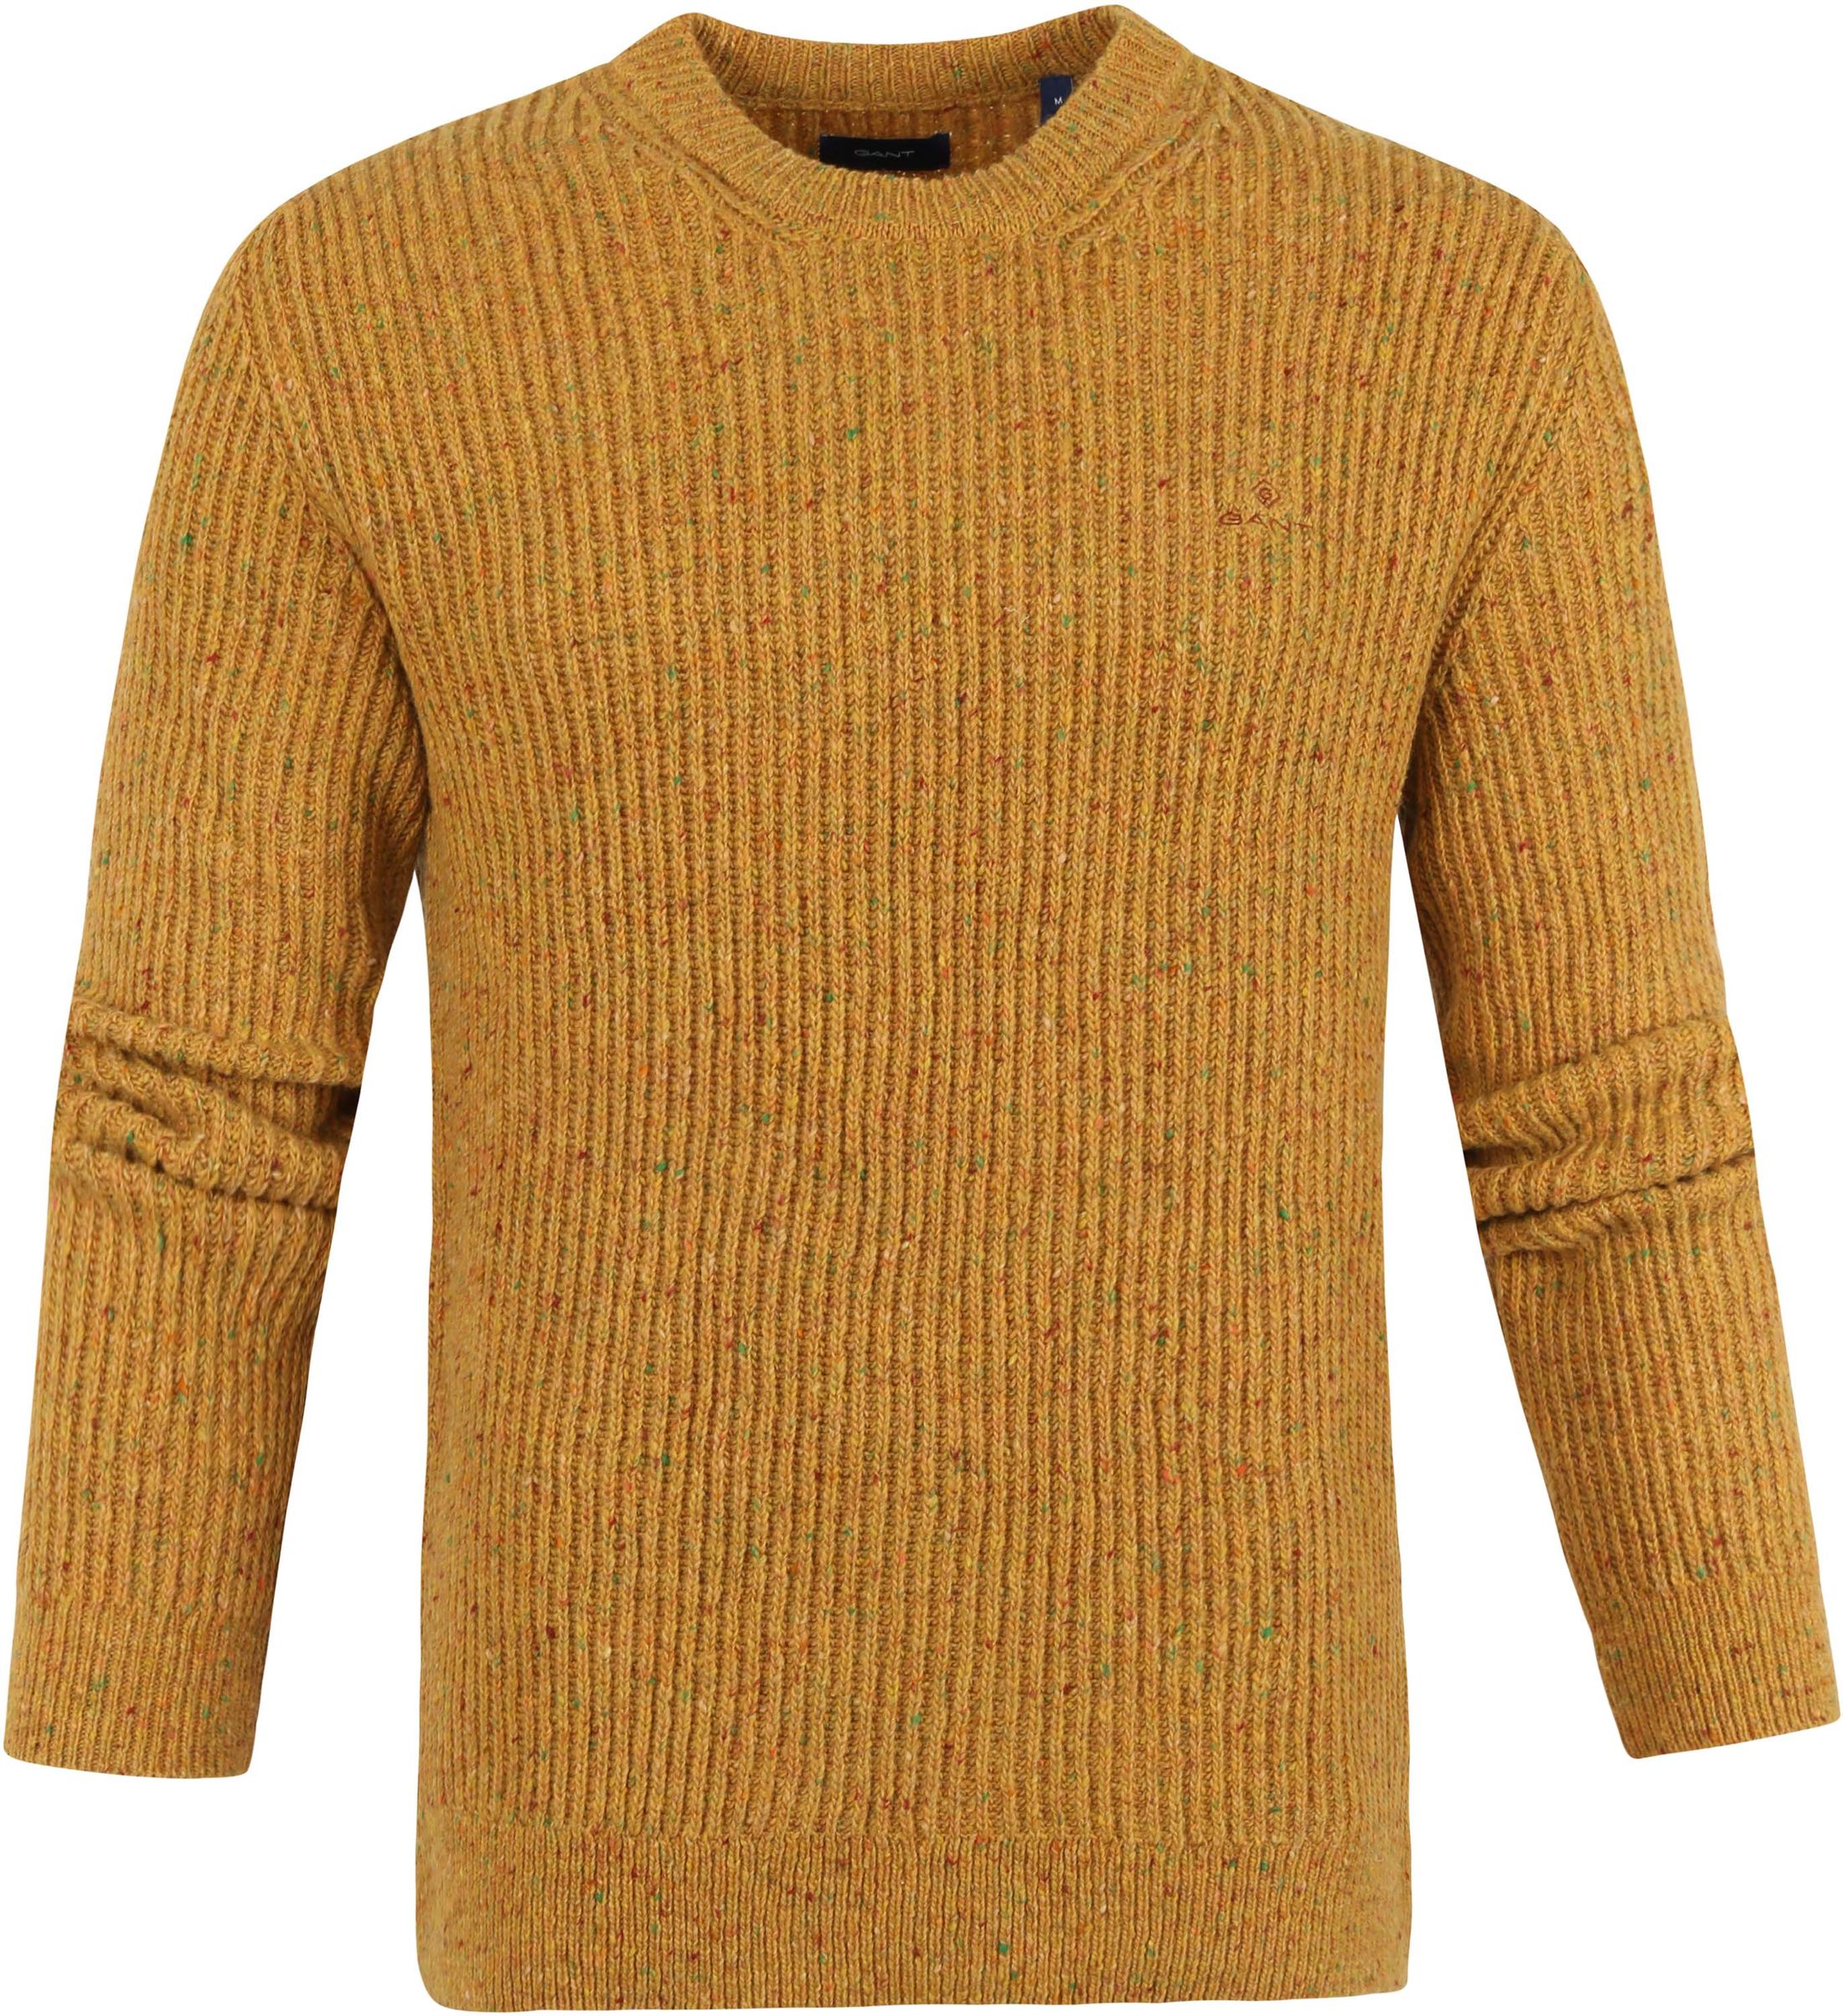 Gant Rib Pullover Ocre Yellow size XL